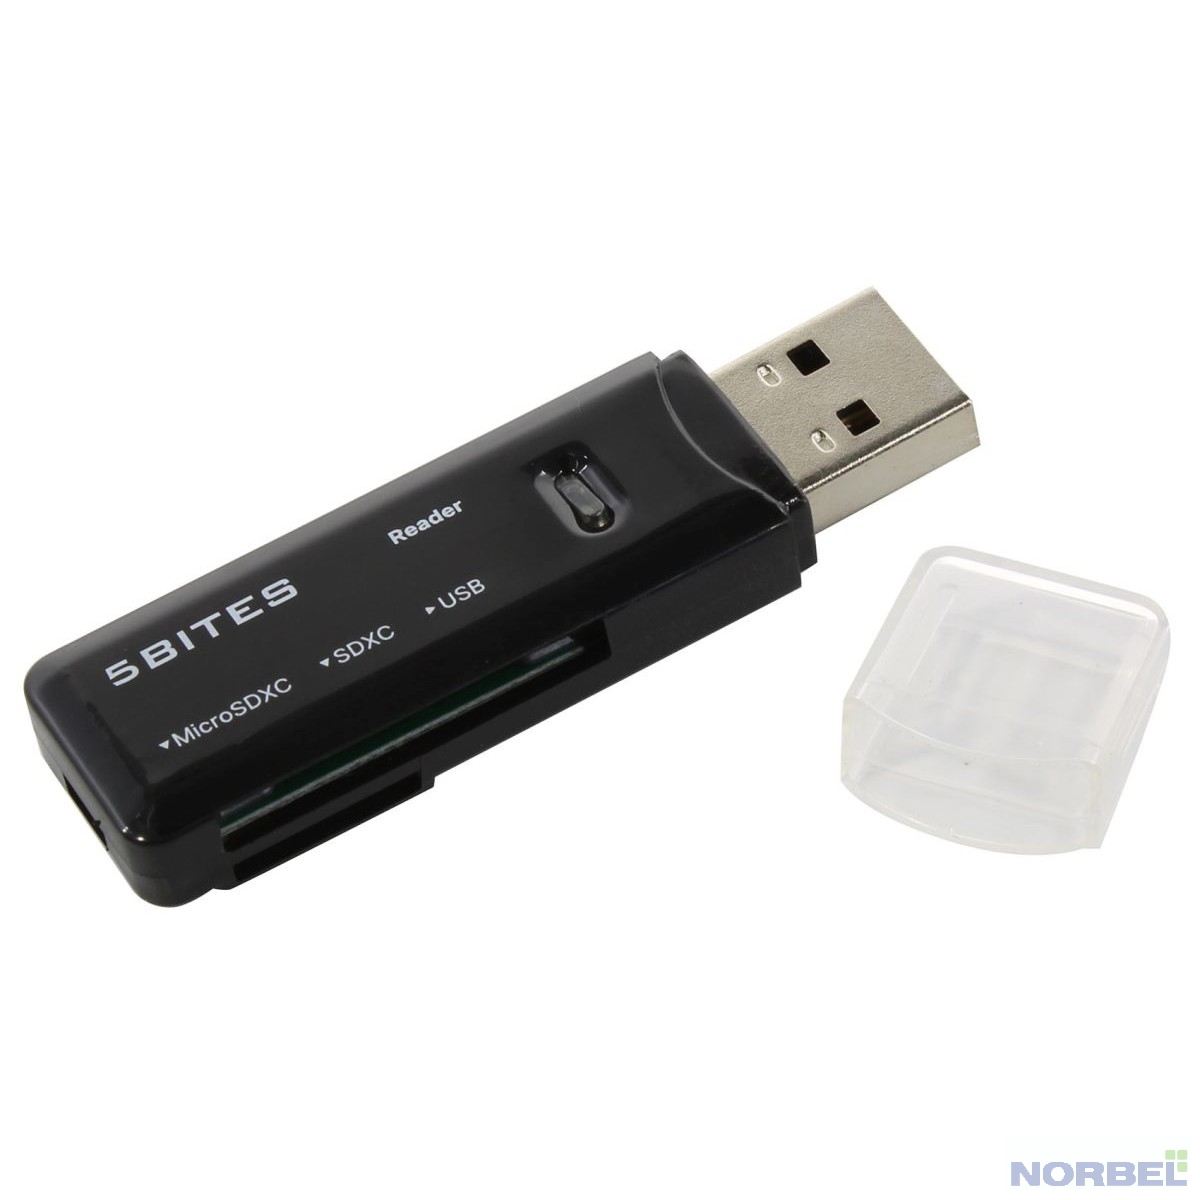 5bites USB-концентраторы Устройство ч з карт памяти RE3-200BK USB3.0 Card reader SD TF USB PLUG BLACK